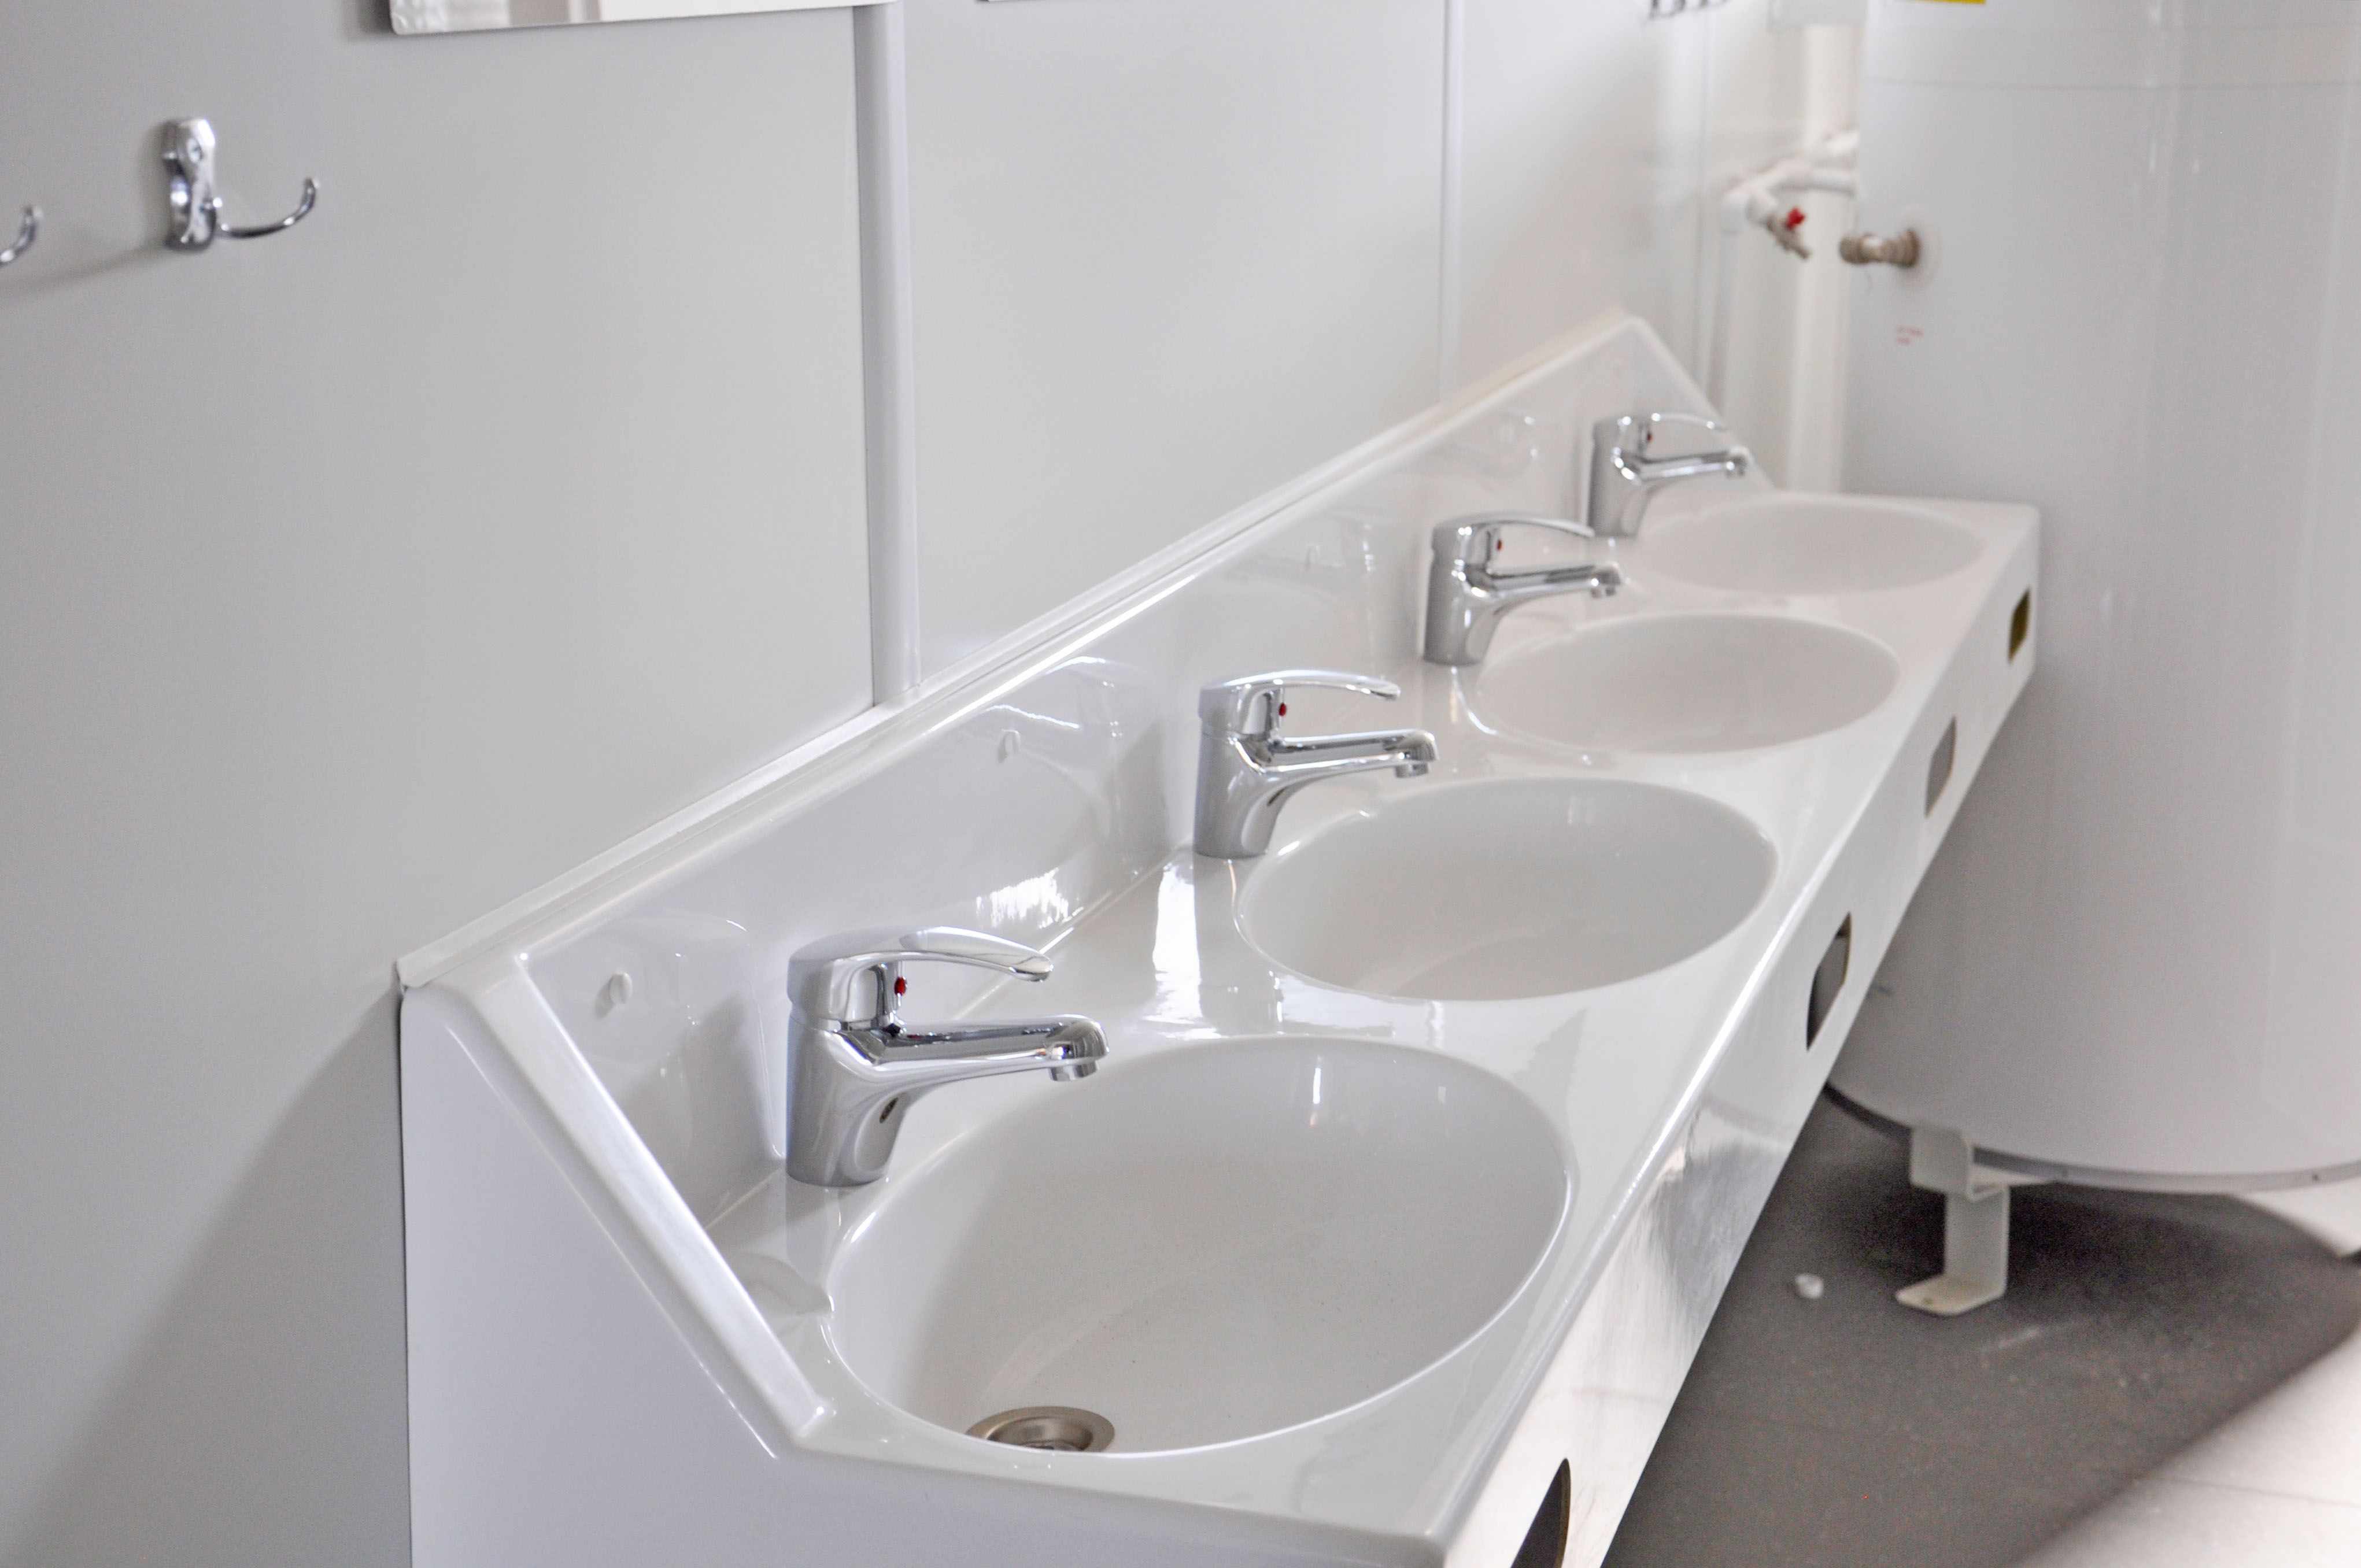 Sanitary facility with wash basin